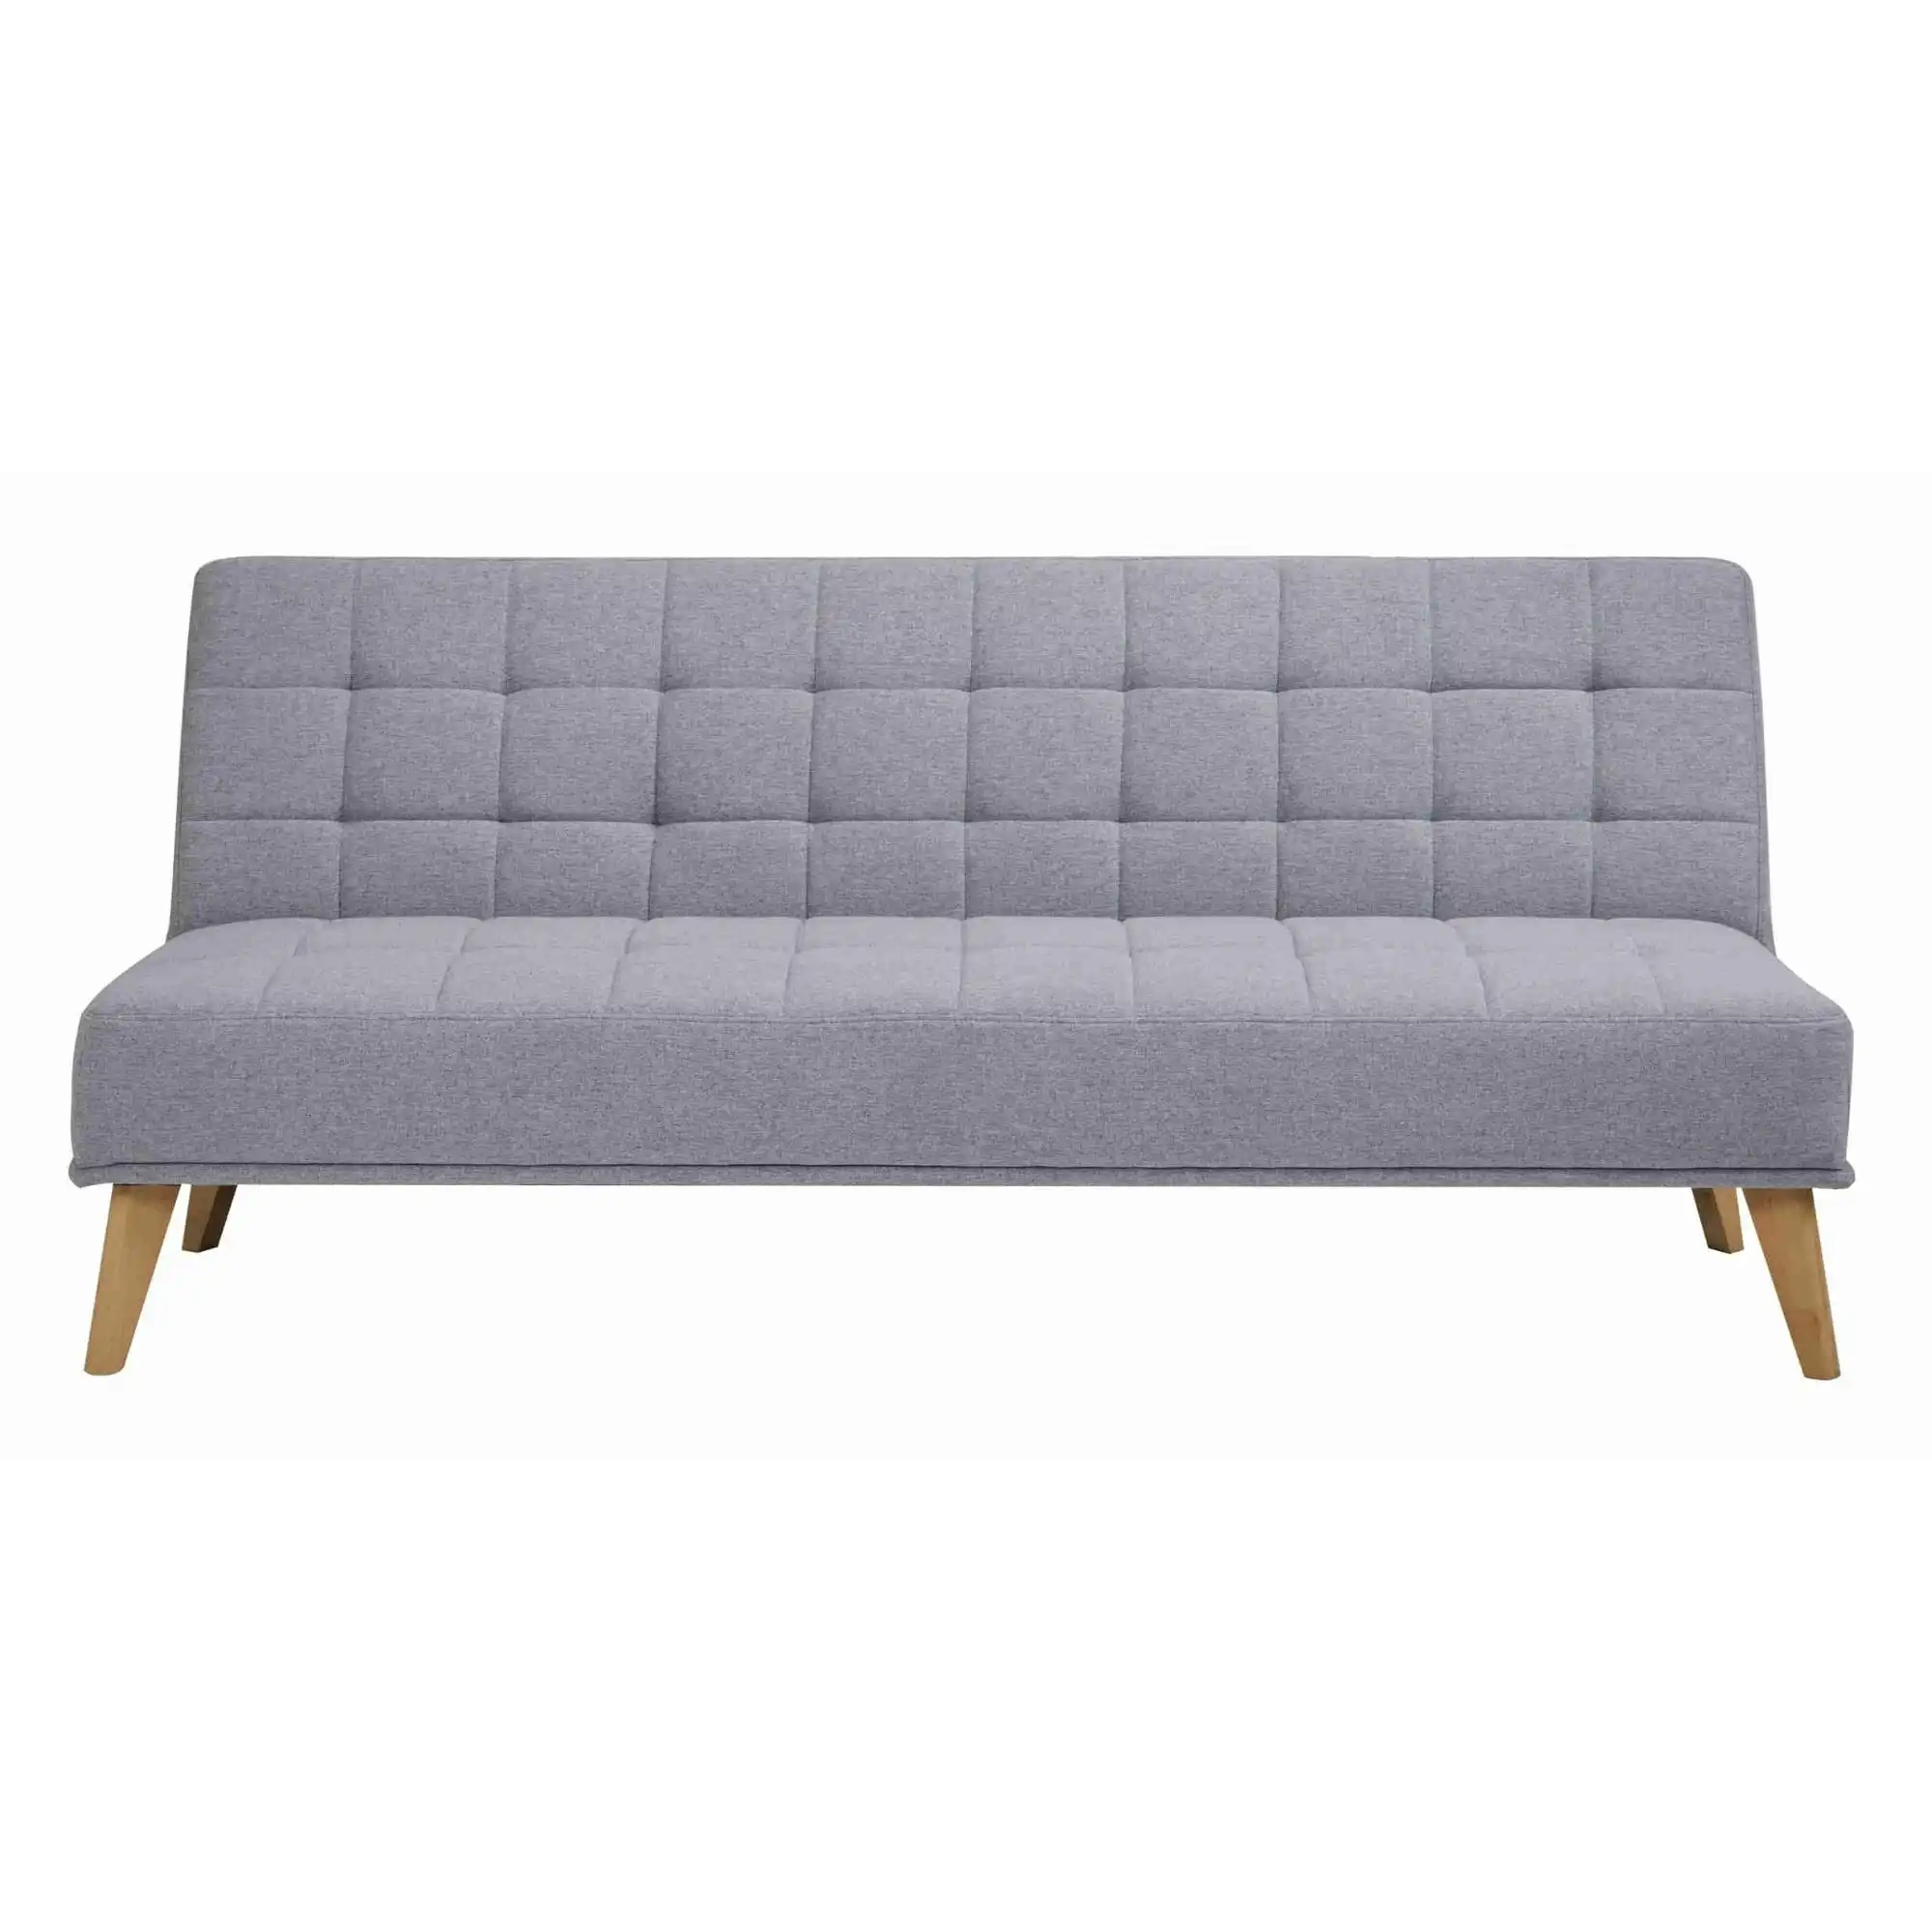 Brando 3 Seater Sofa Bed